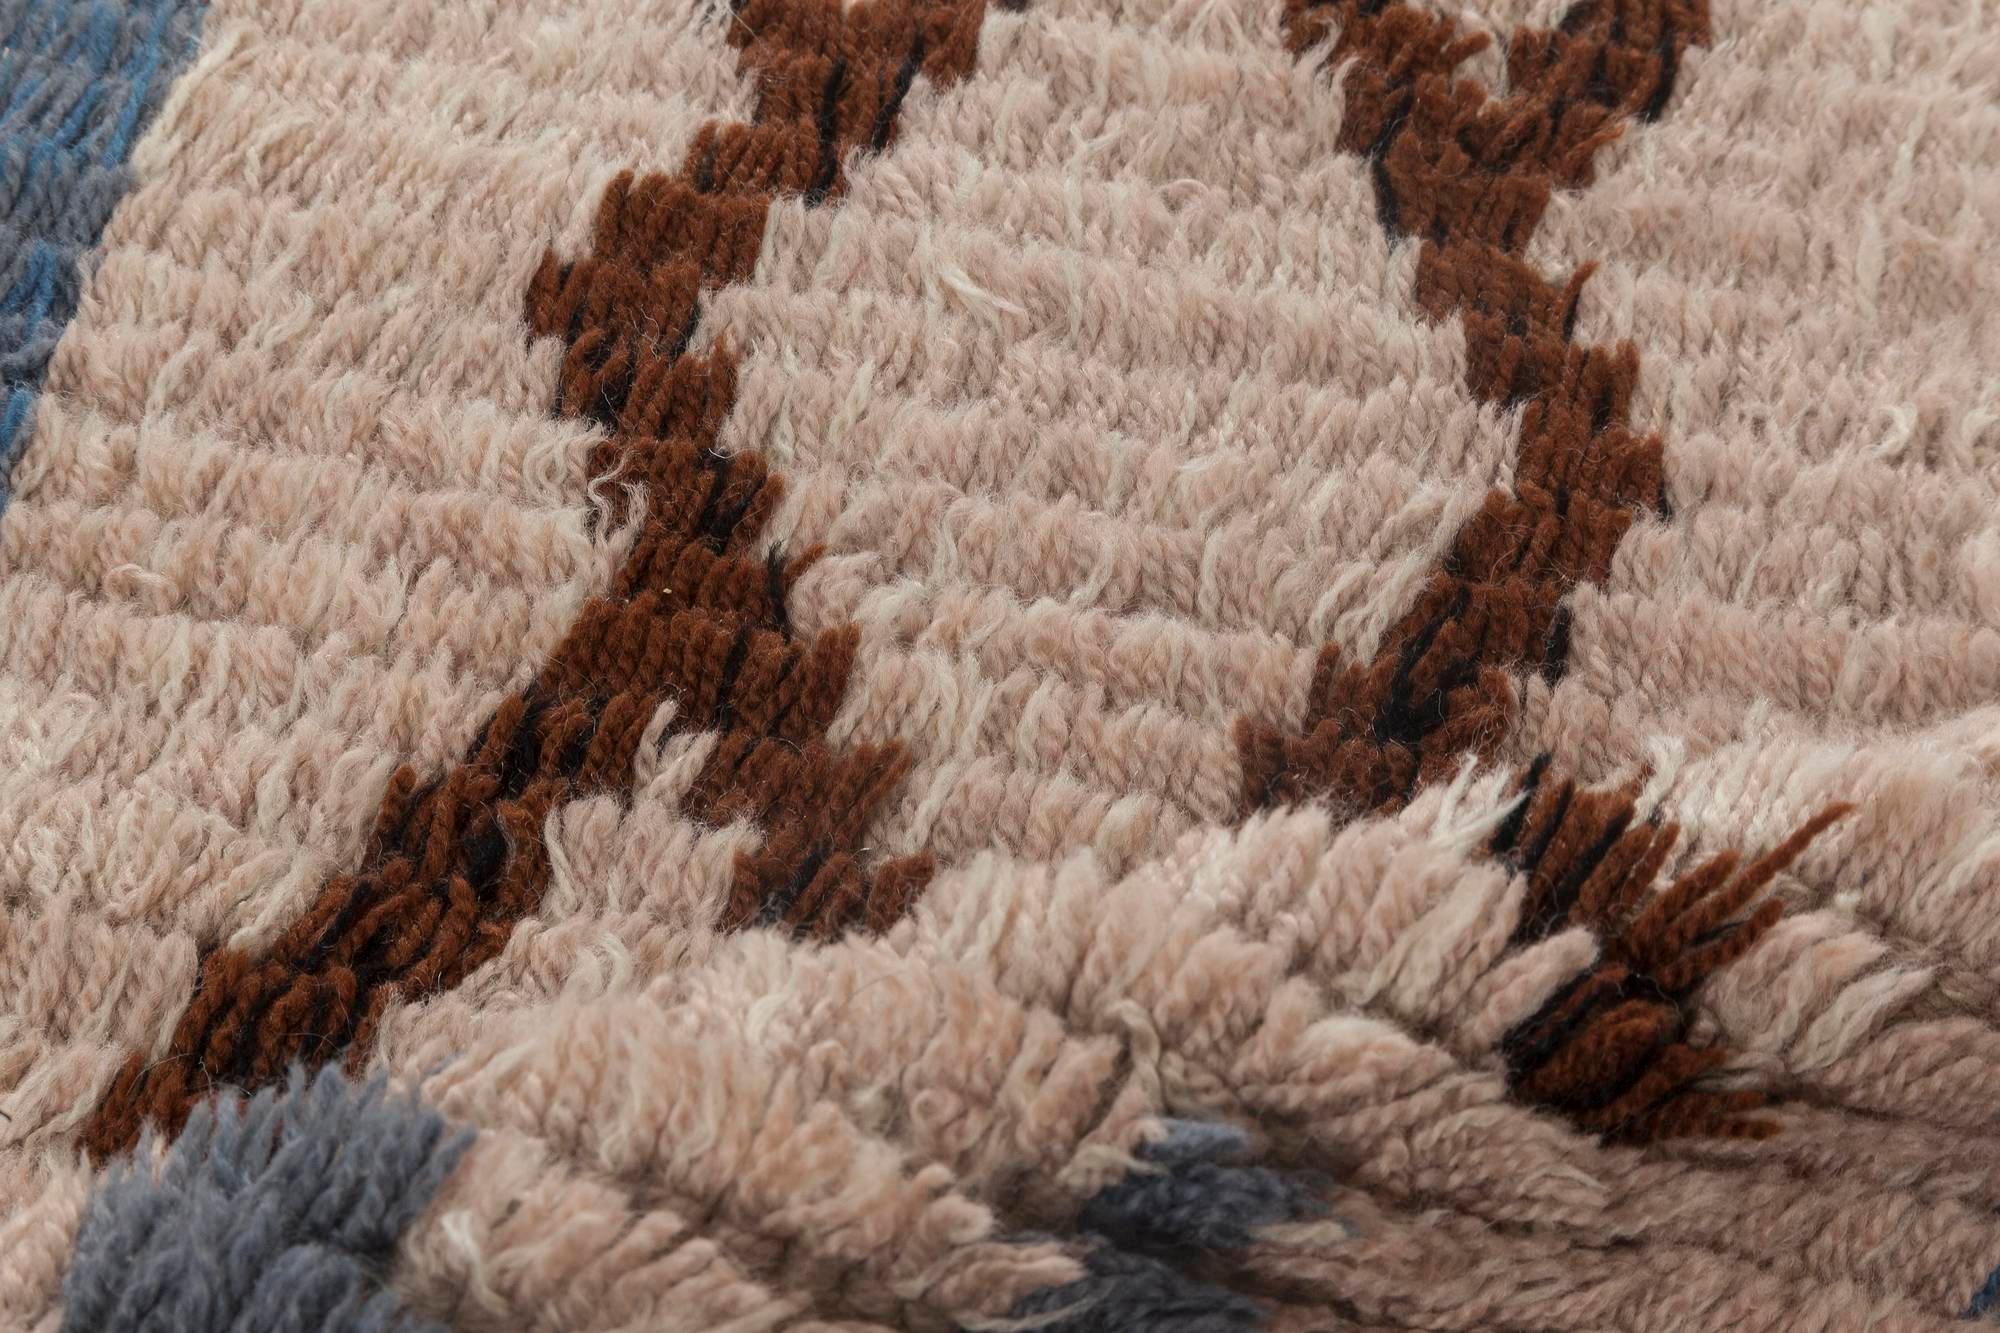 Vintage Swedish geometric blue, brown, beige pile rug by Doris Leslie Blau
Size: 7'3